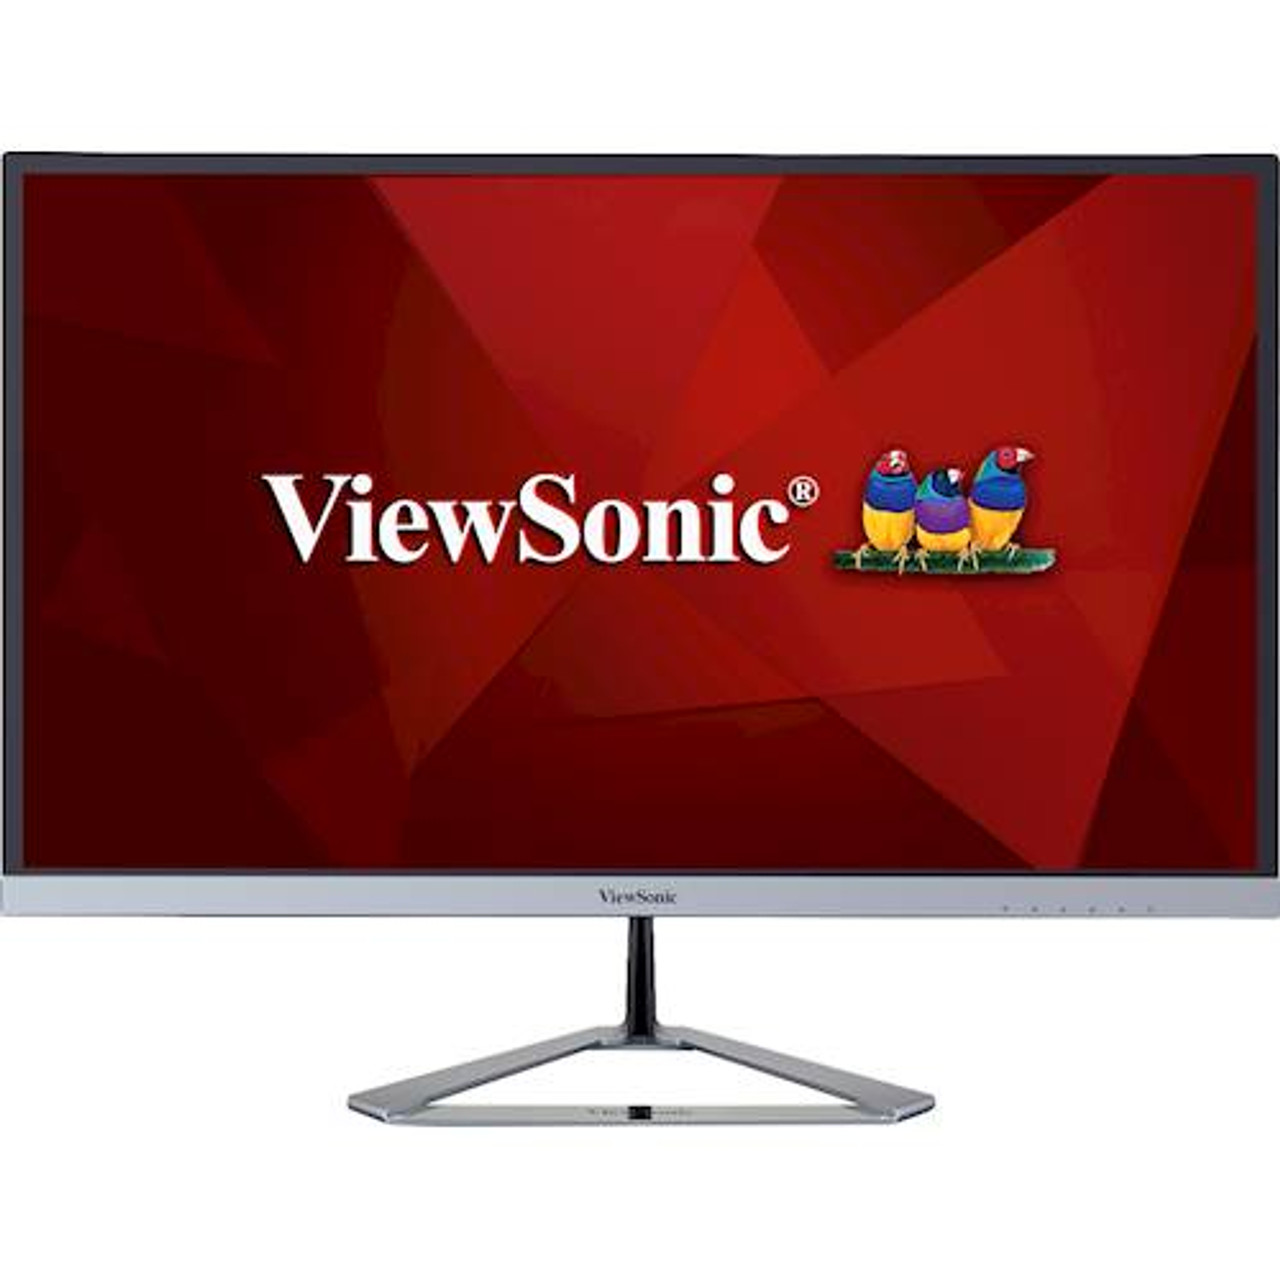 ViewSonic - VX2776-smhd 27" IPS LED FHD Monitor - Black/Silver